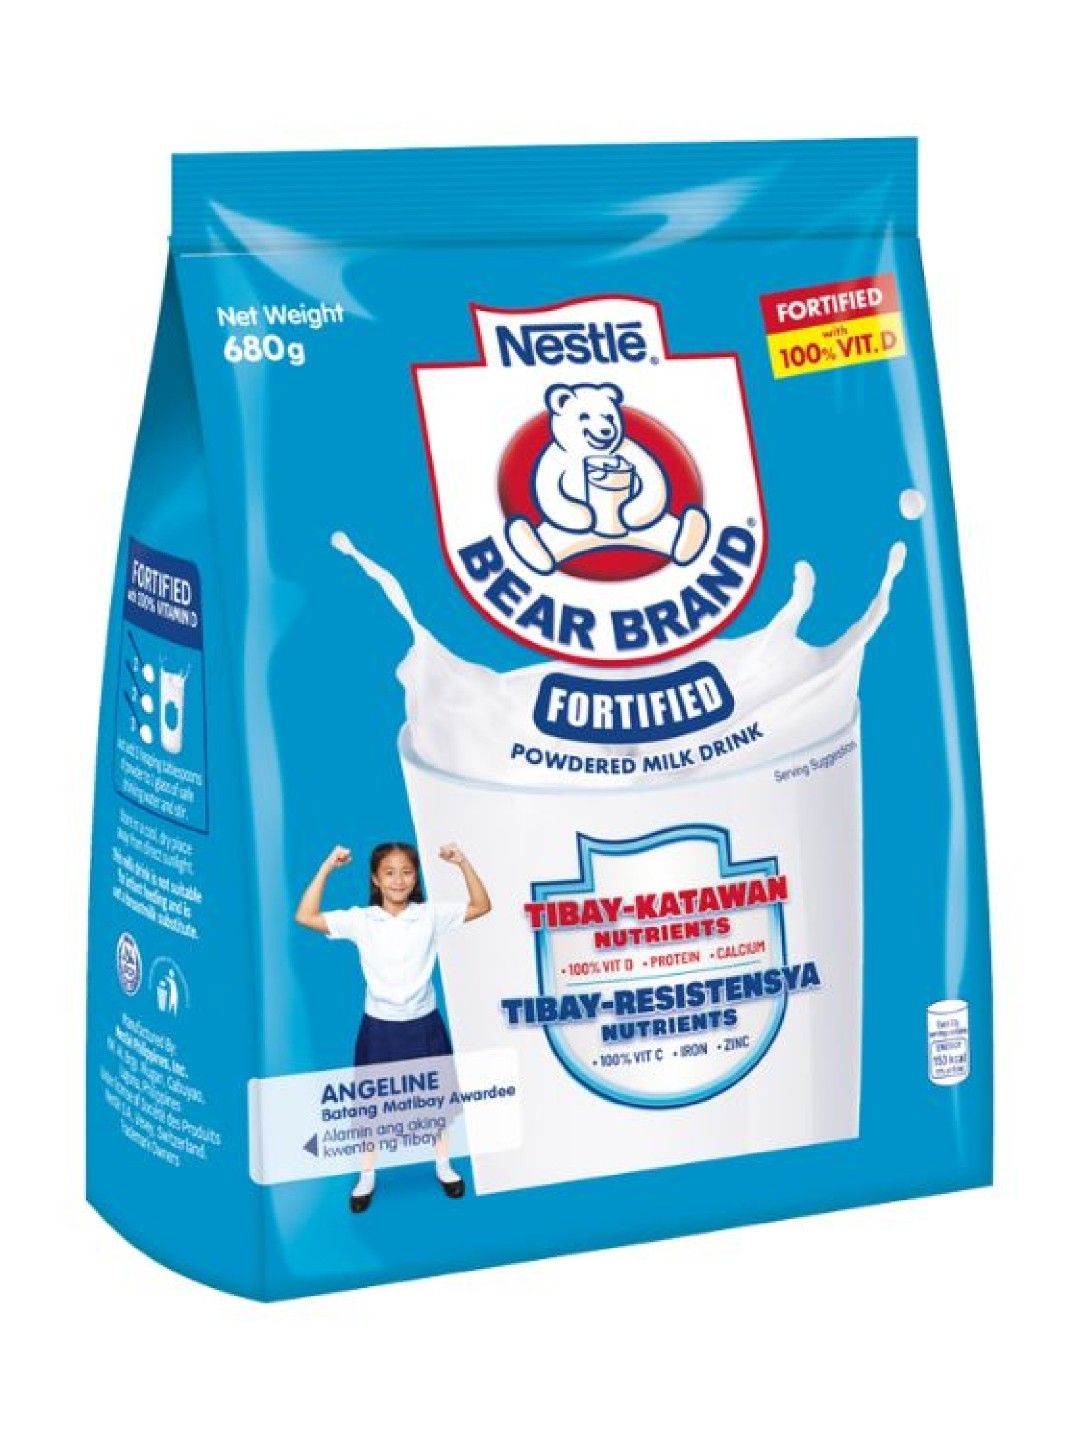 Bear Brand Fortified Powdered Milk Drink (680g)